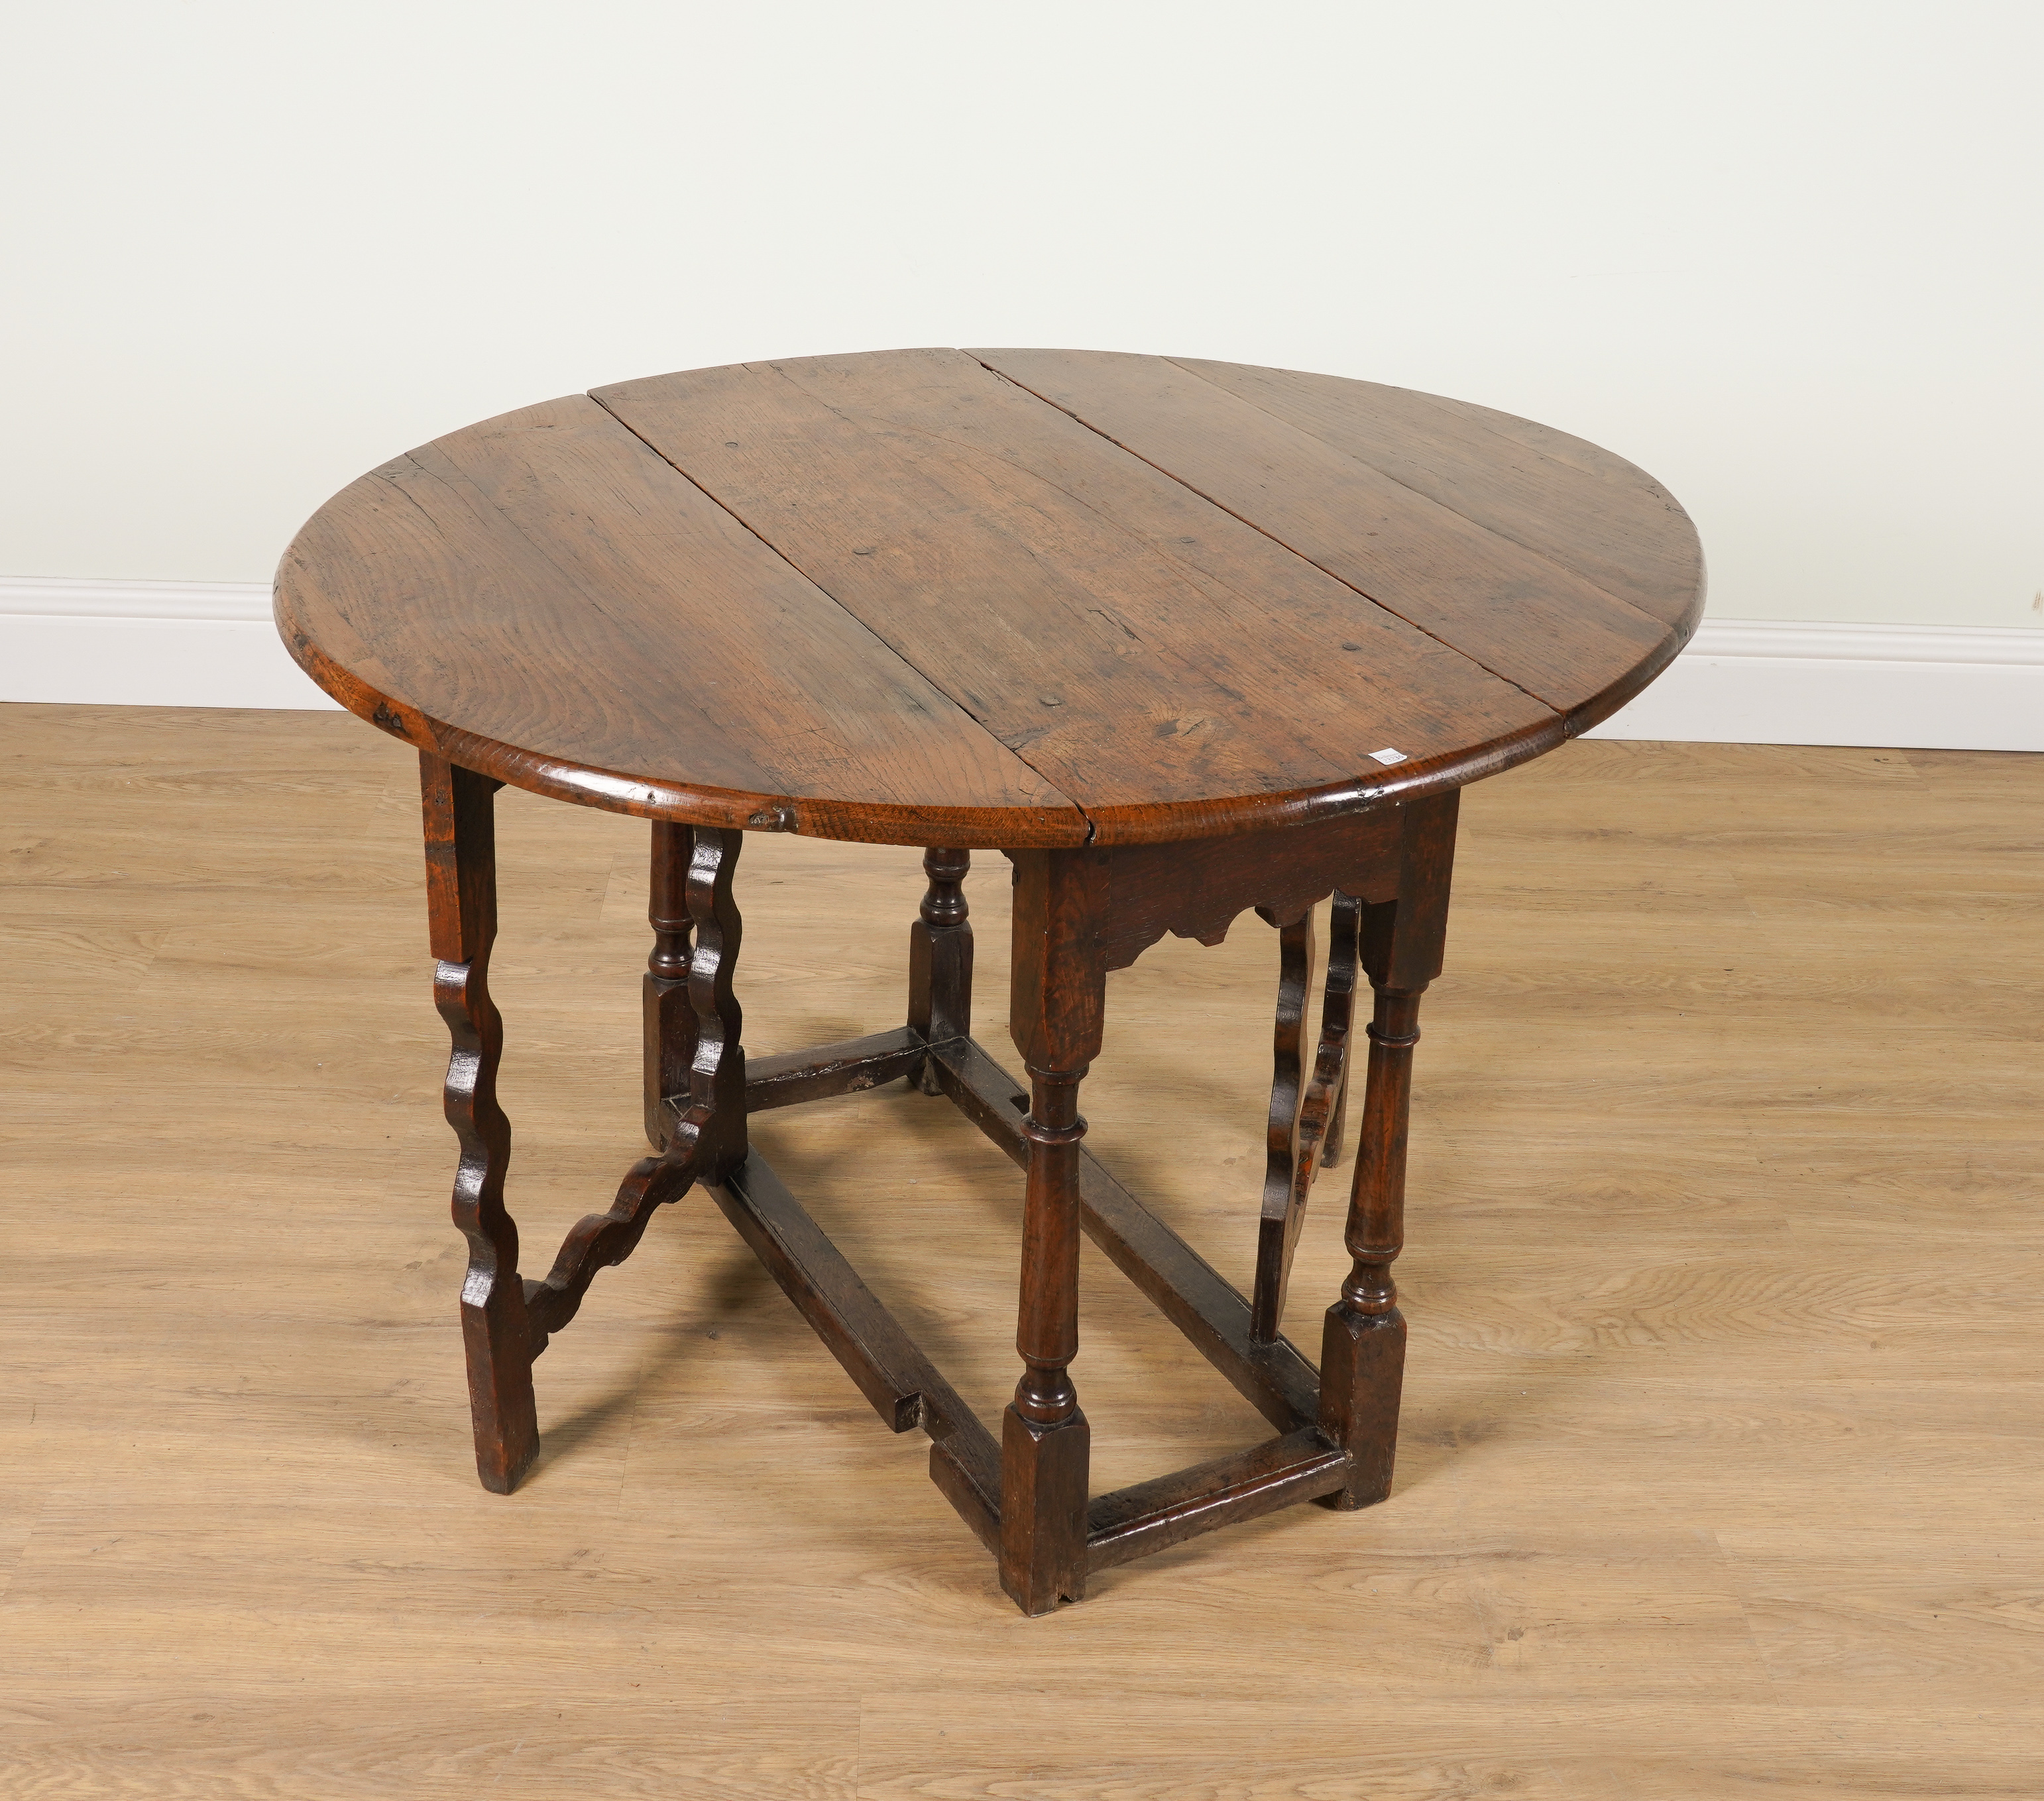 A 17TH CENTURY OAK DROP-LEAF TABLE